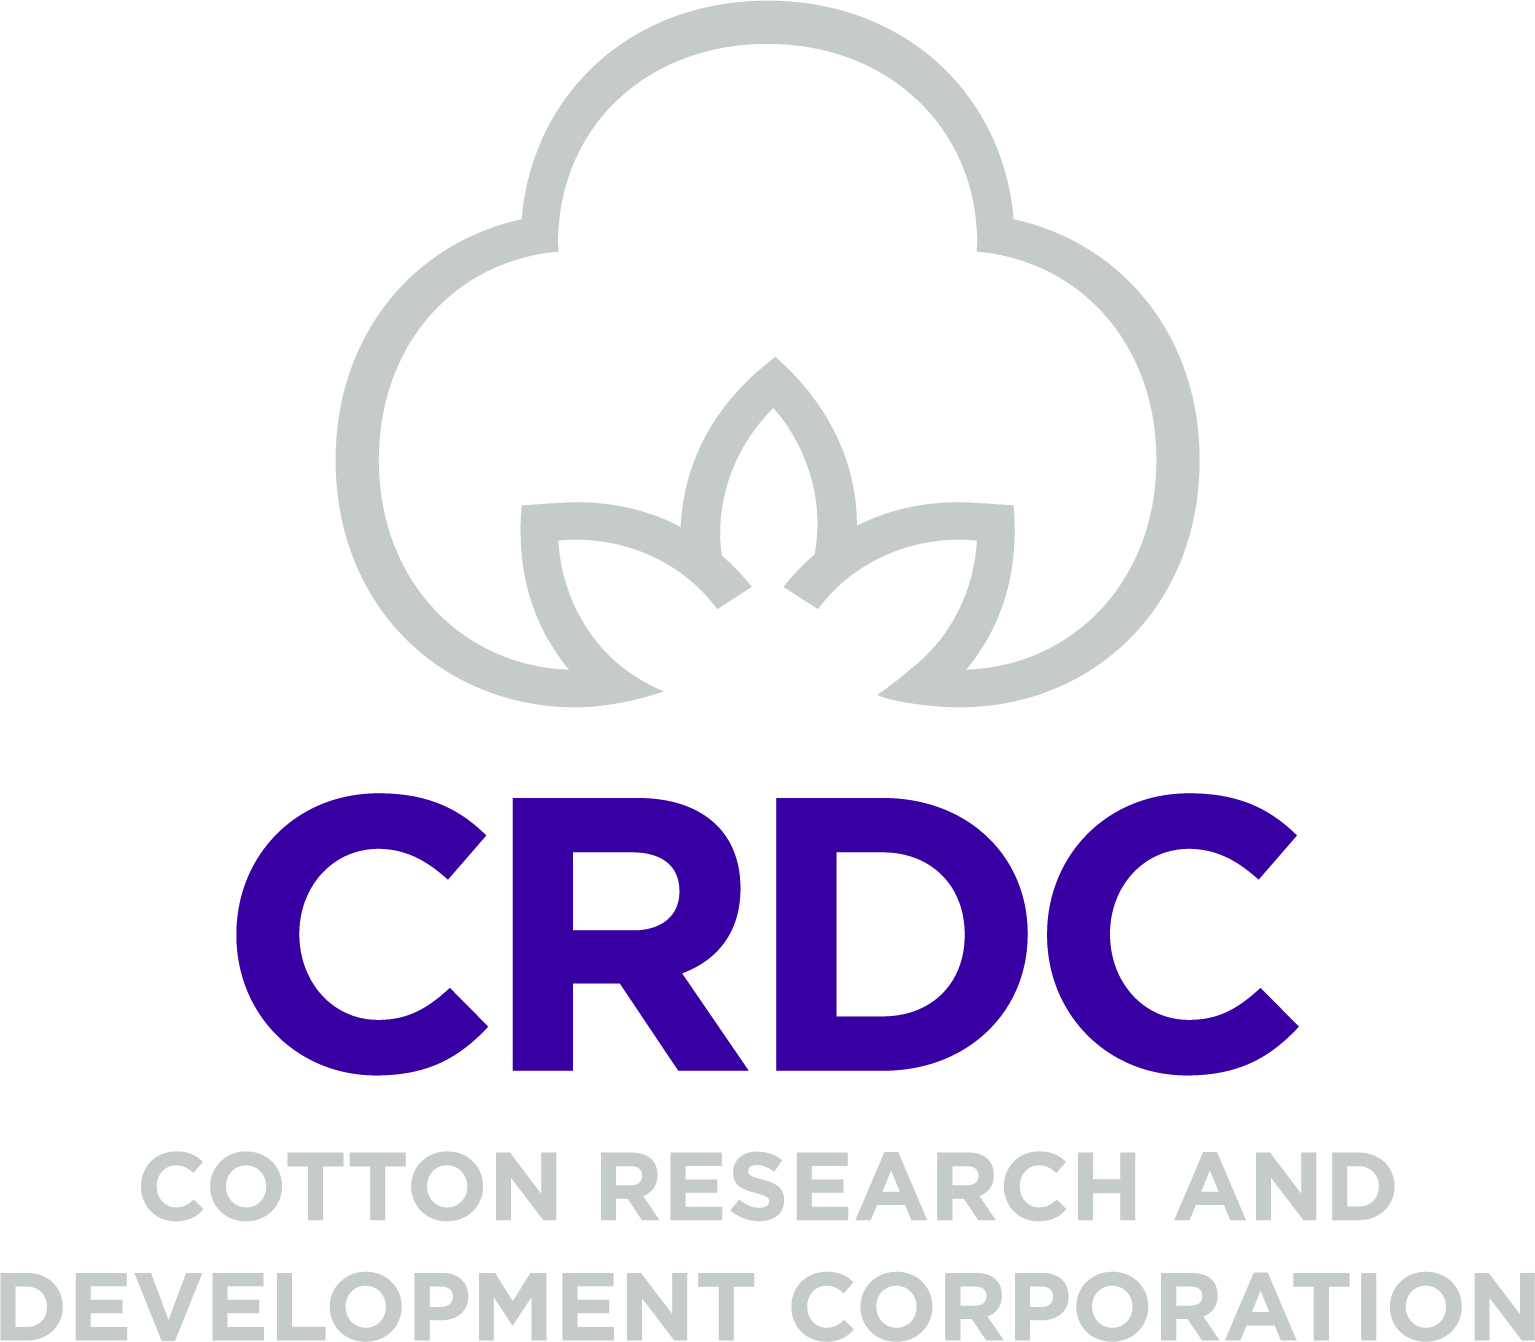 Cotton Research and Development Corporation (CRDC) logo